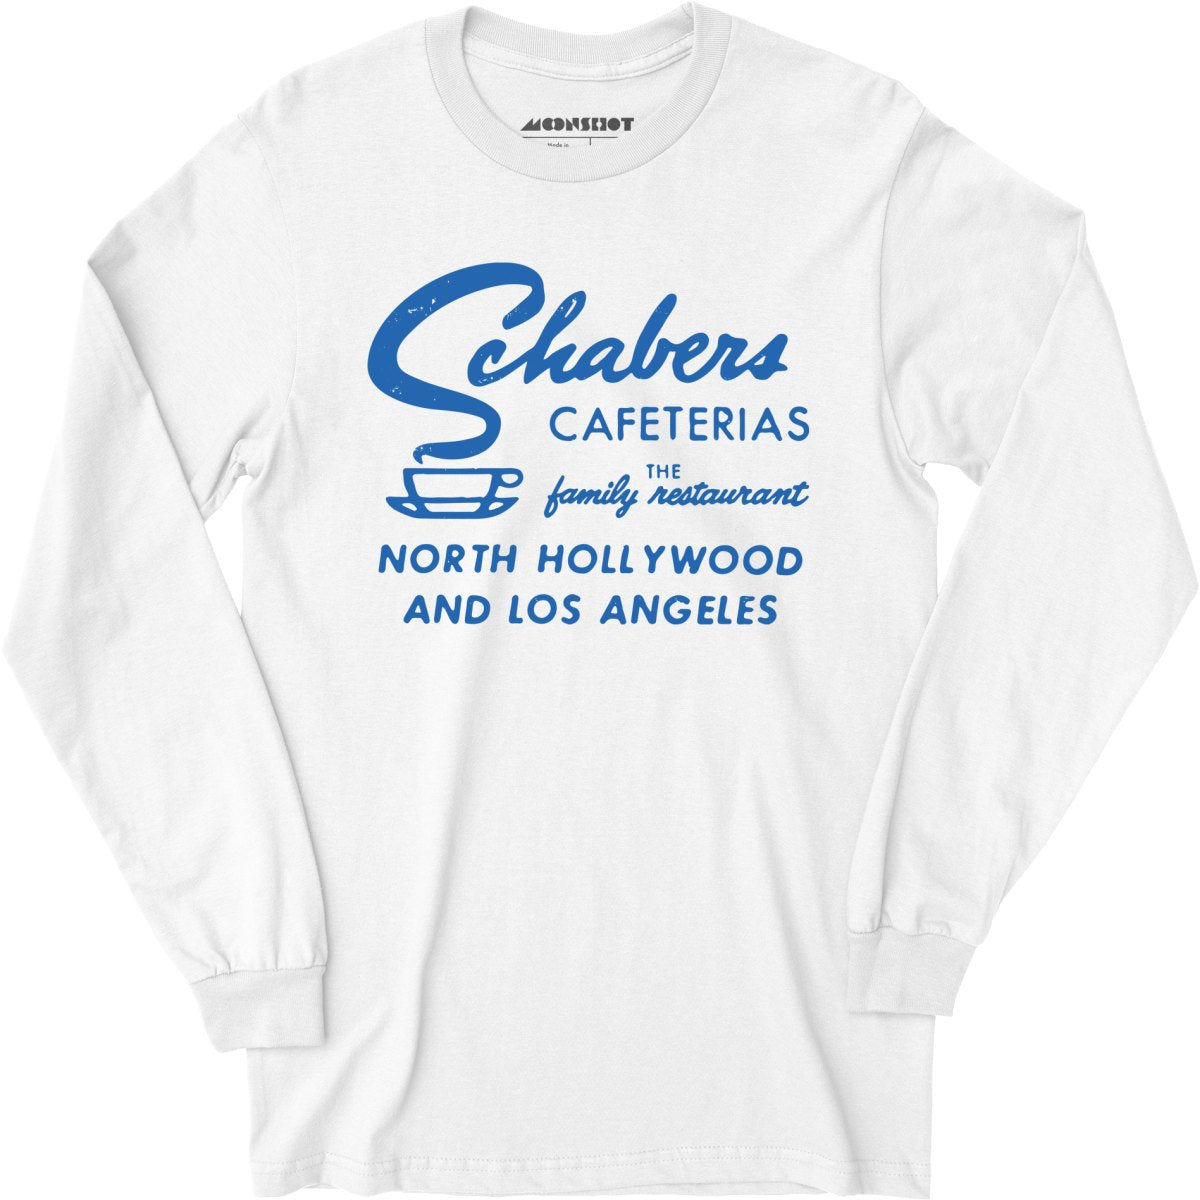 Schabers Cafeterias - Los Angeles, CA - Vintage Restaurant - Long Sleeve T-Shirt